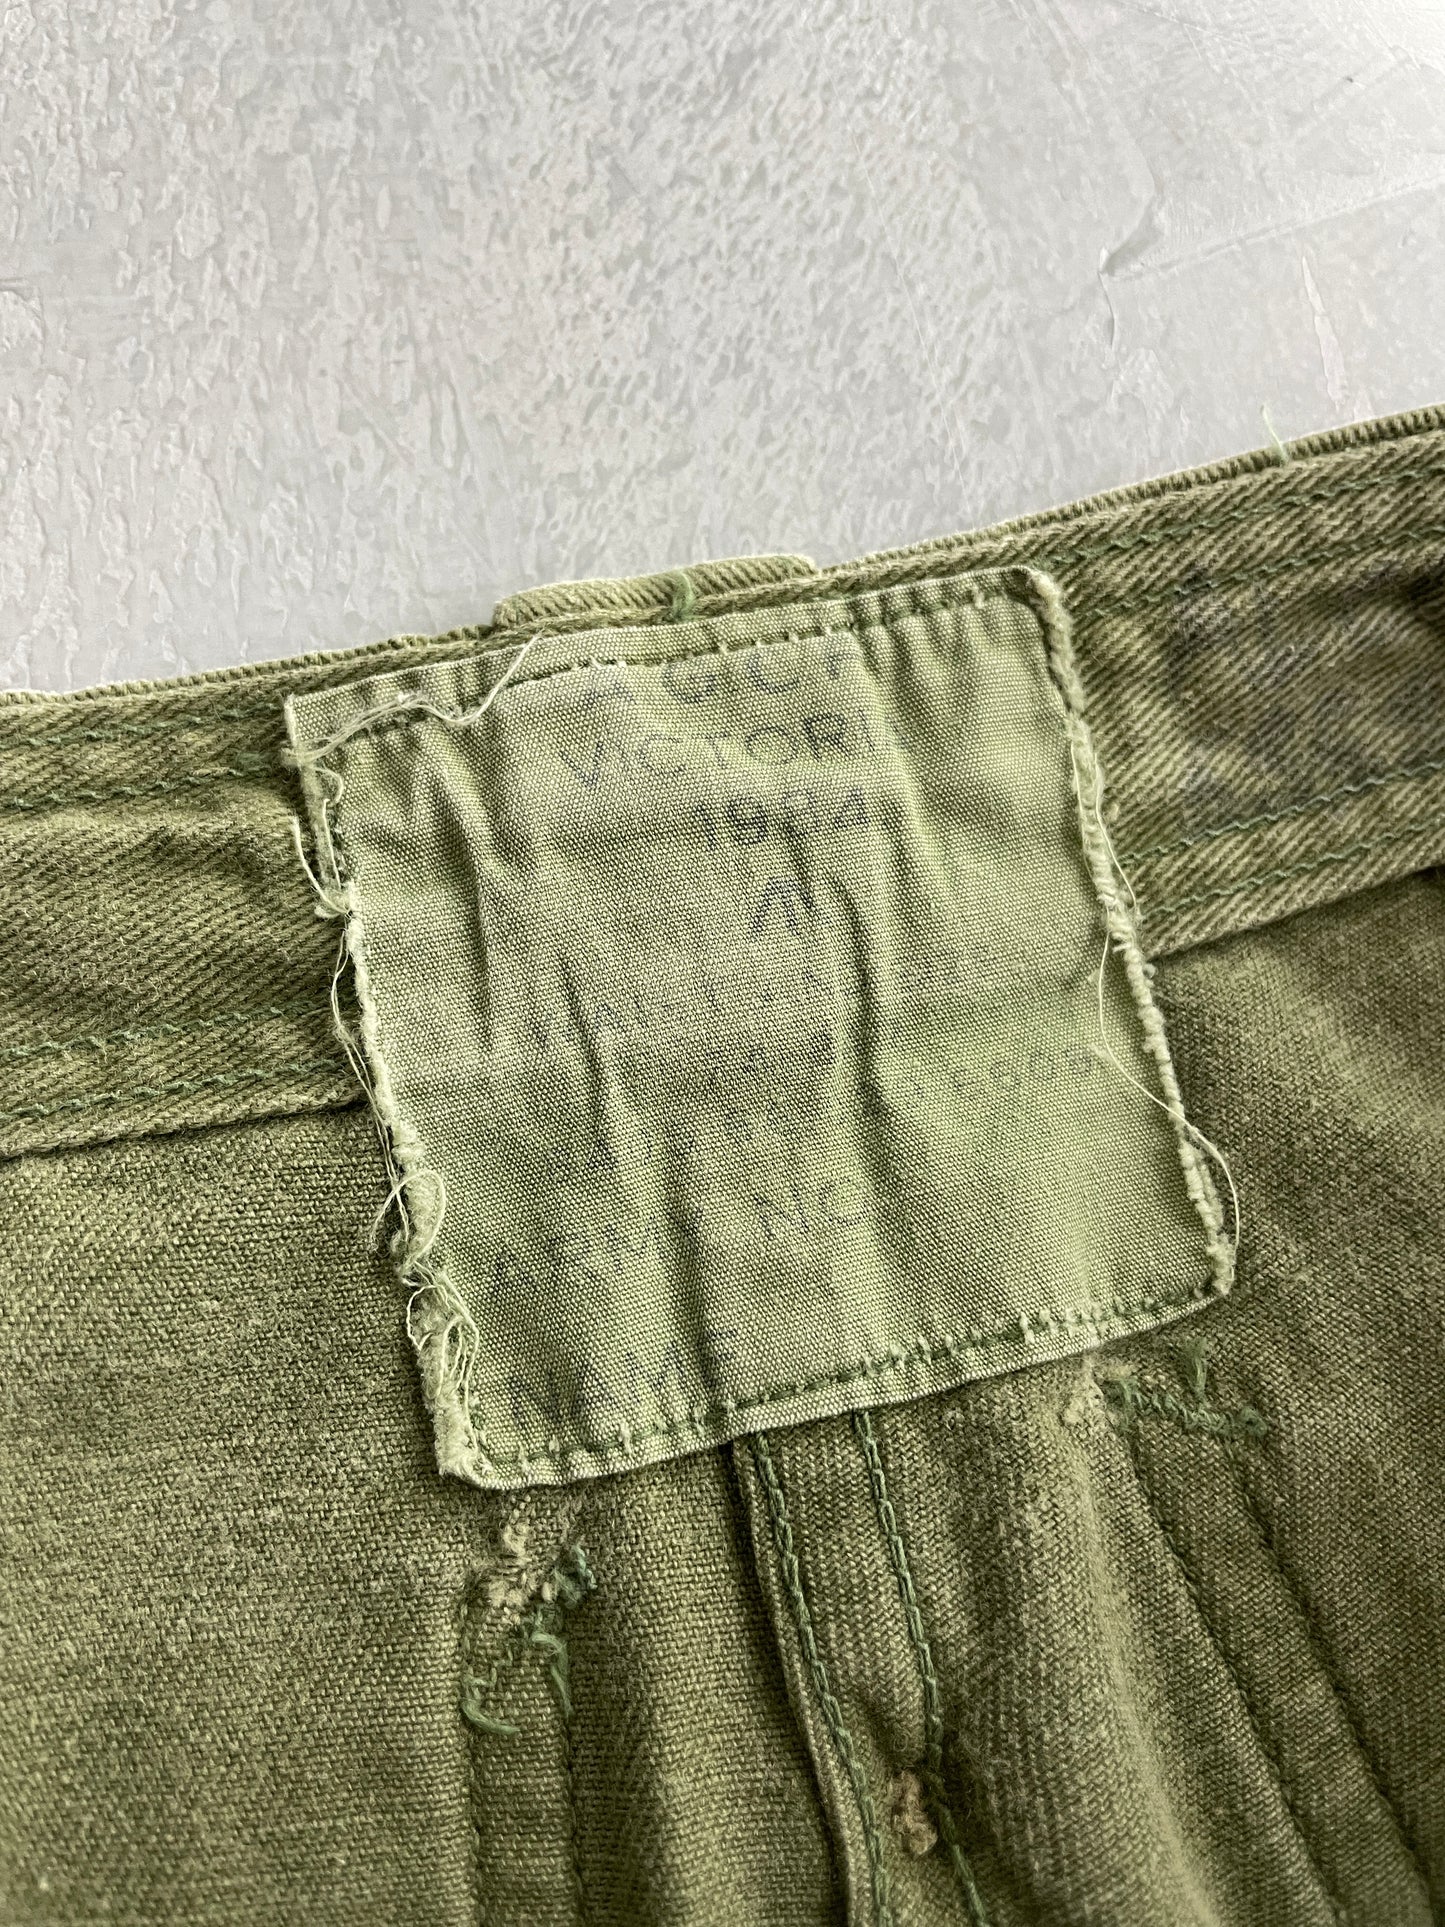 Aus Army Cargo Pants [36"]